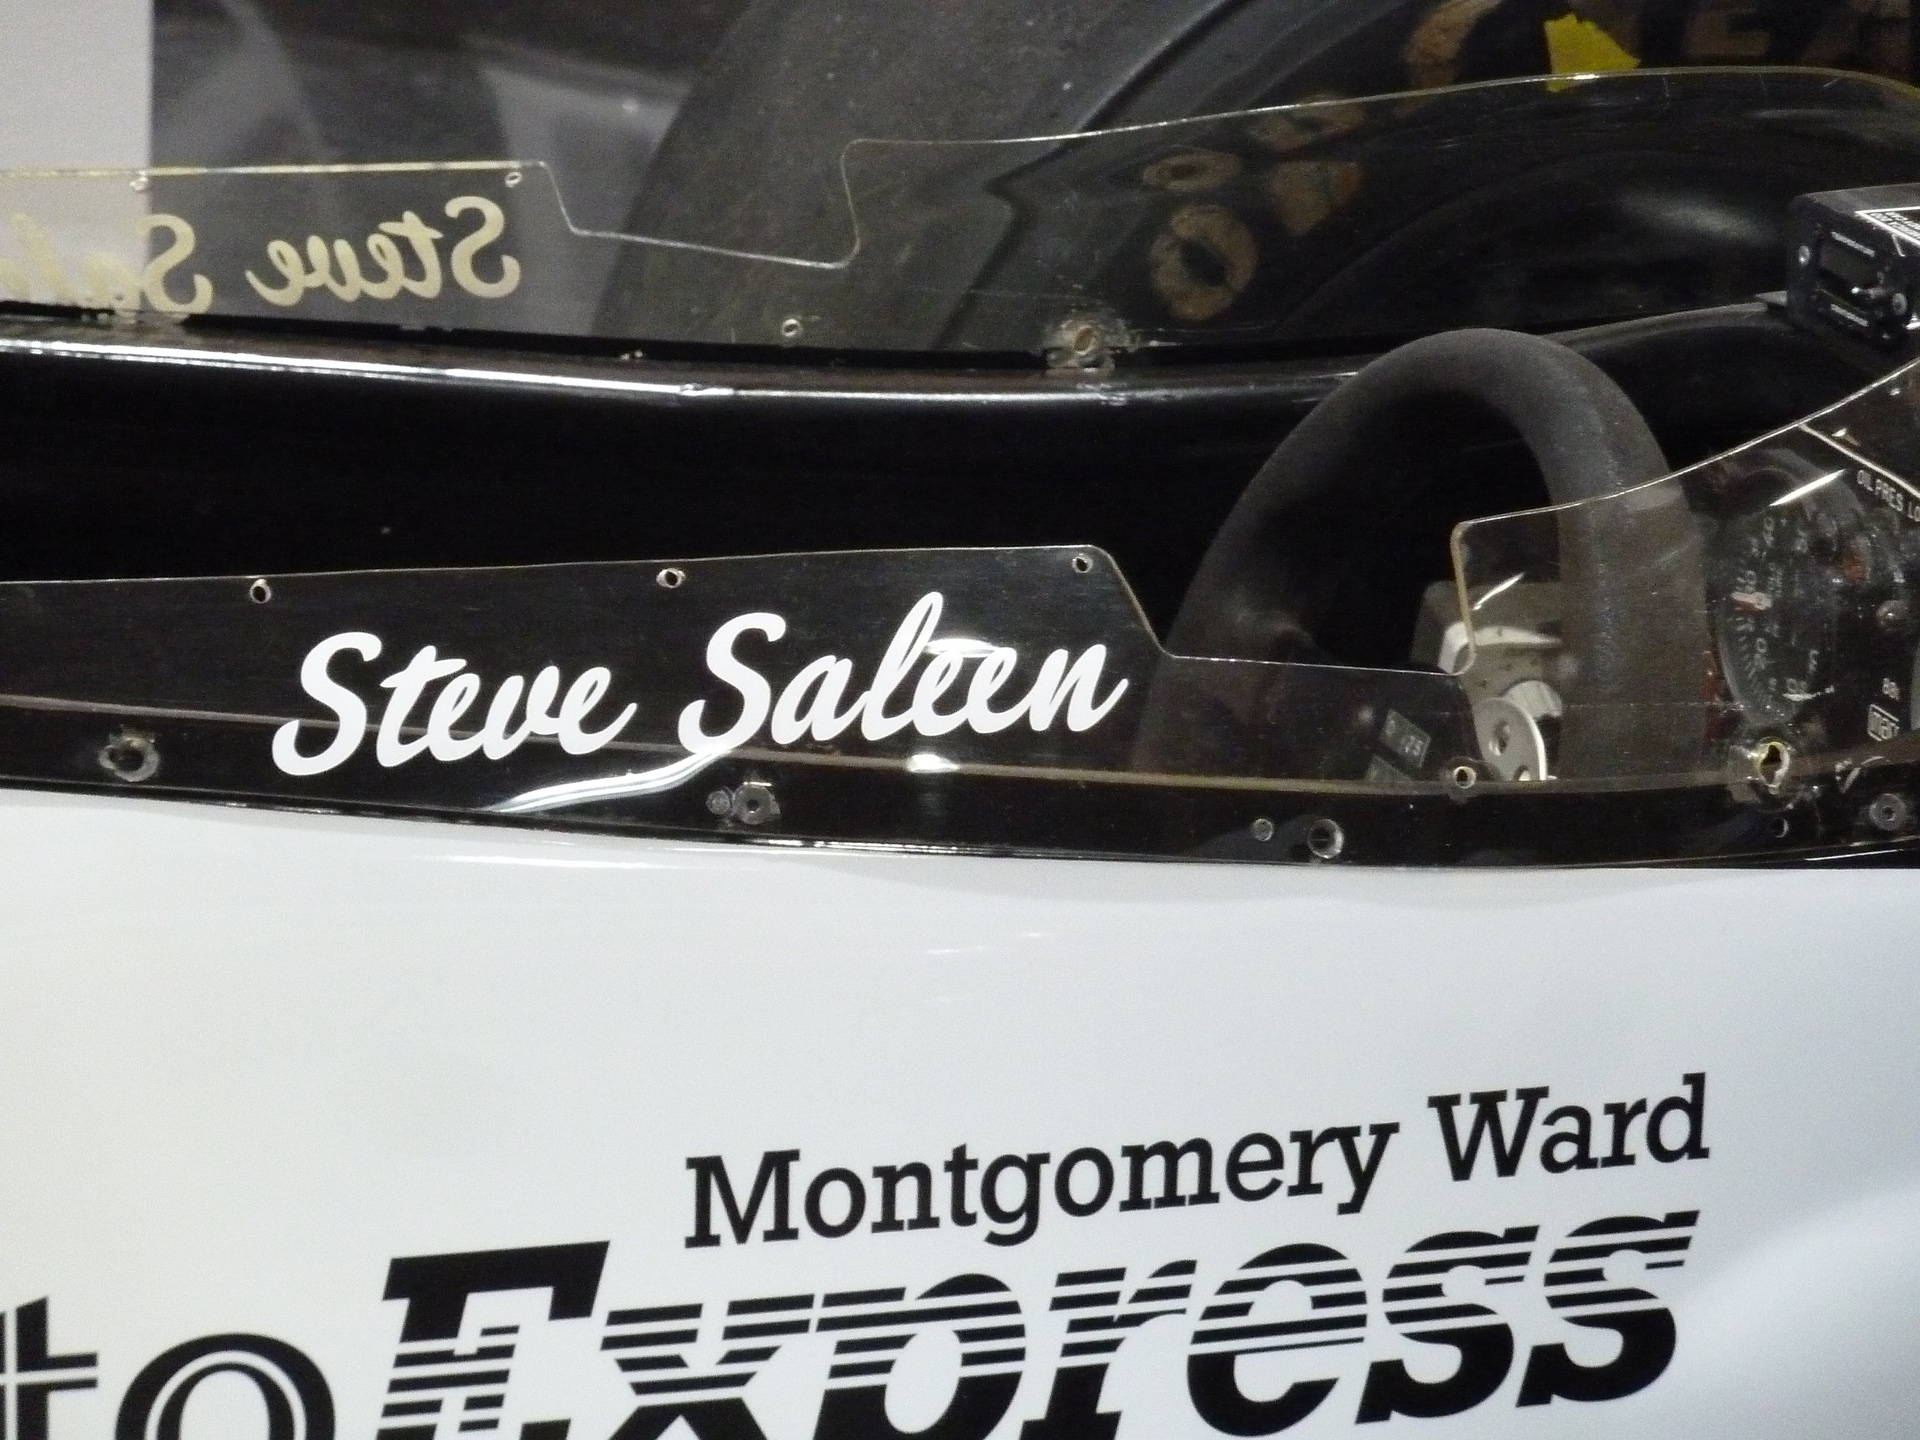 Name of Steve Saleen on windshield of Saleen Mustang race car